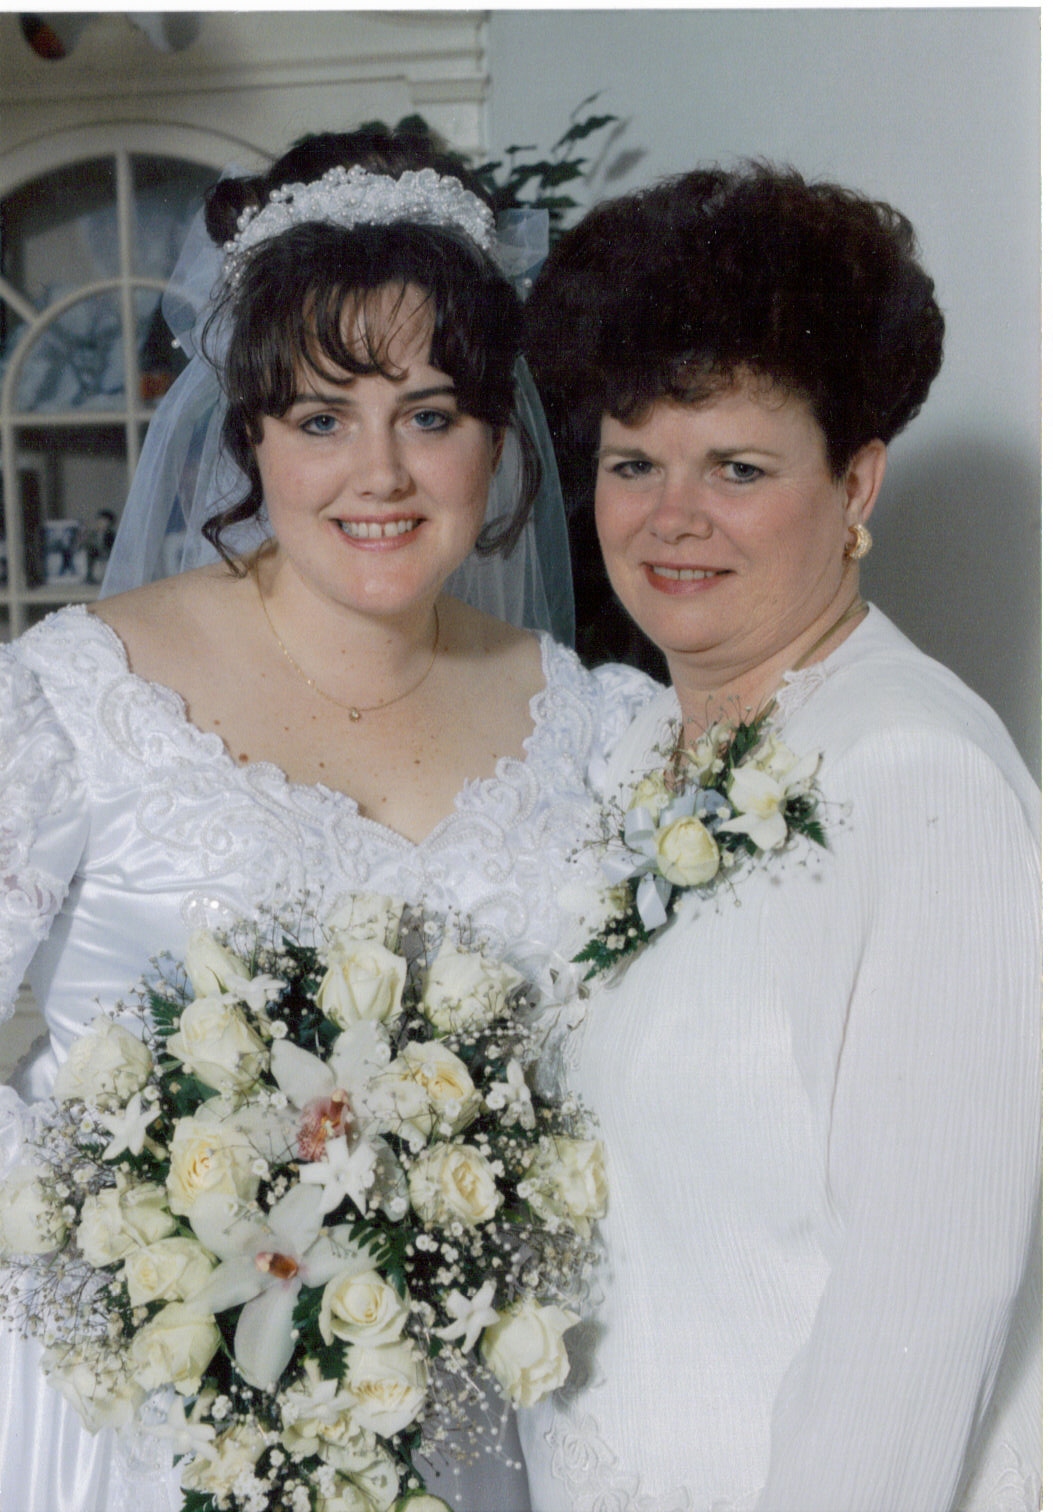 [brandis+wedding2c_April+25+1998.jpg]